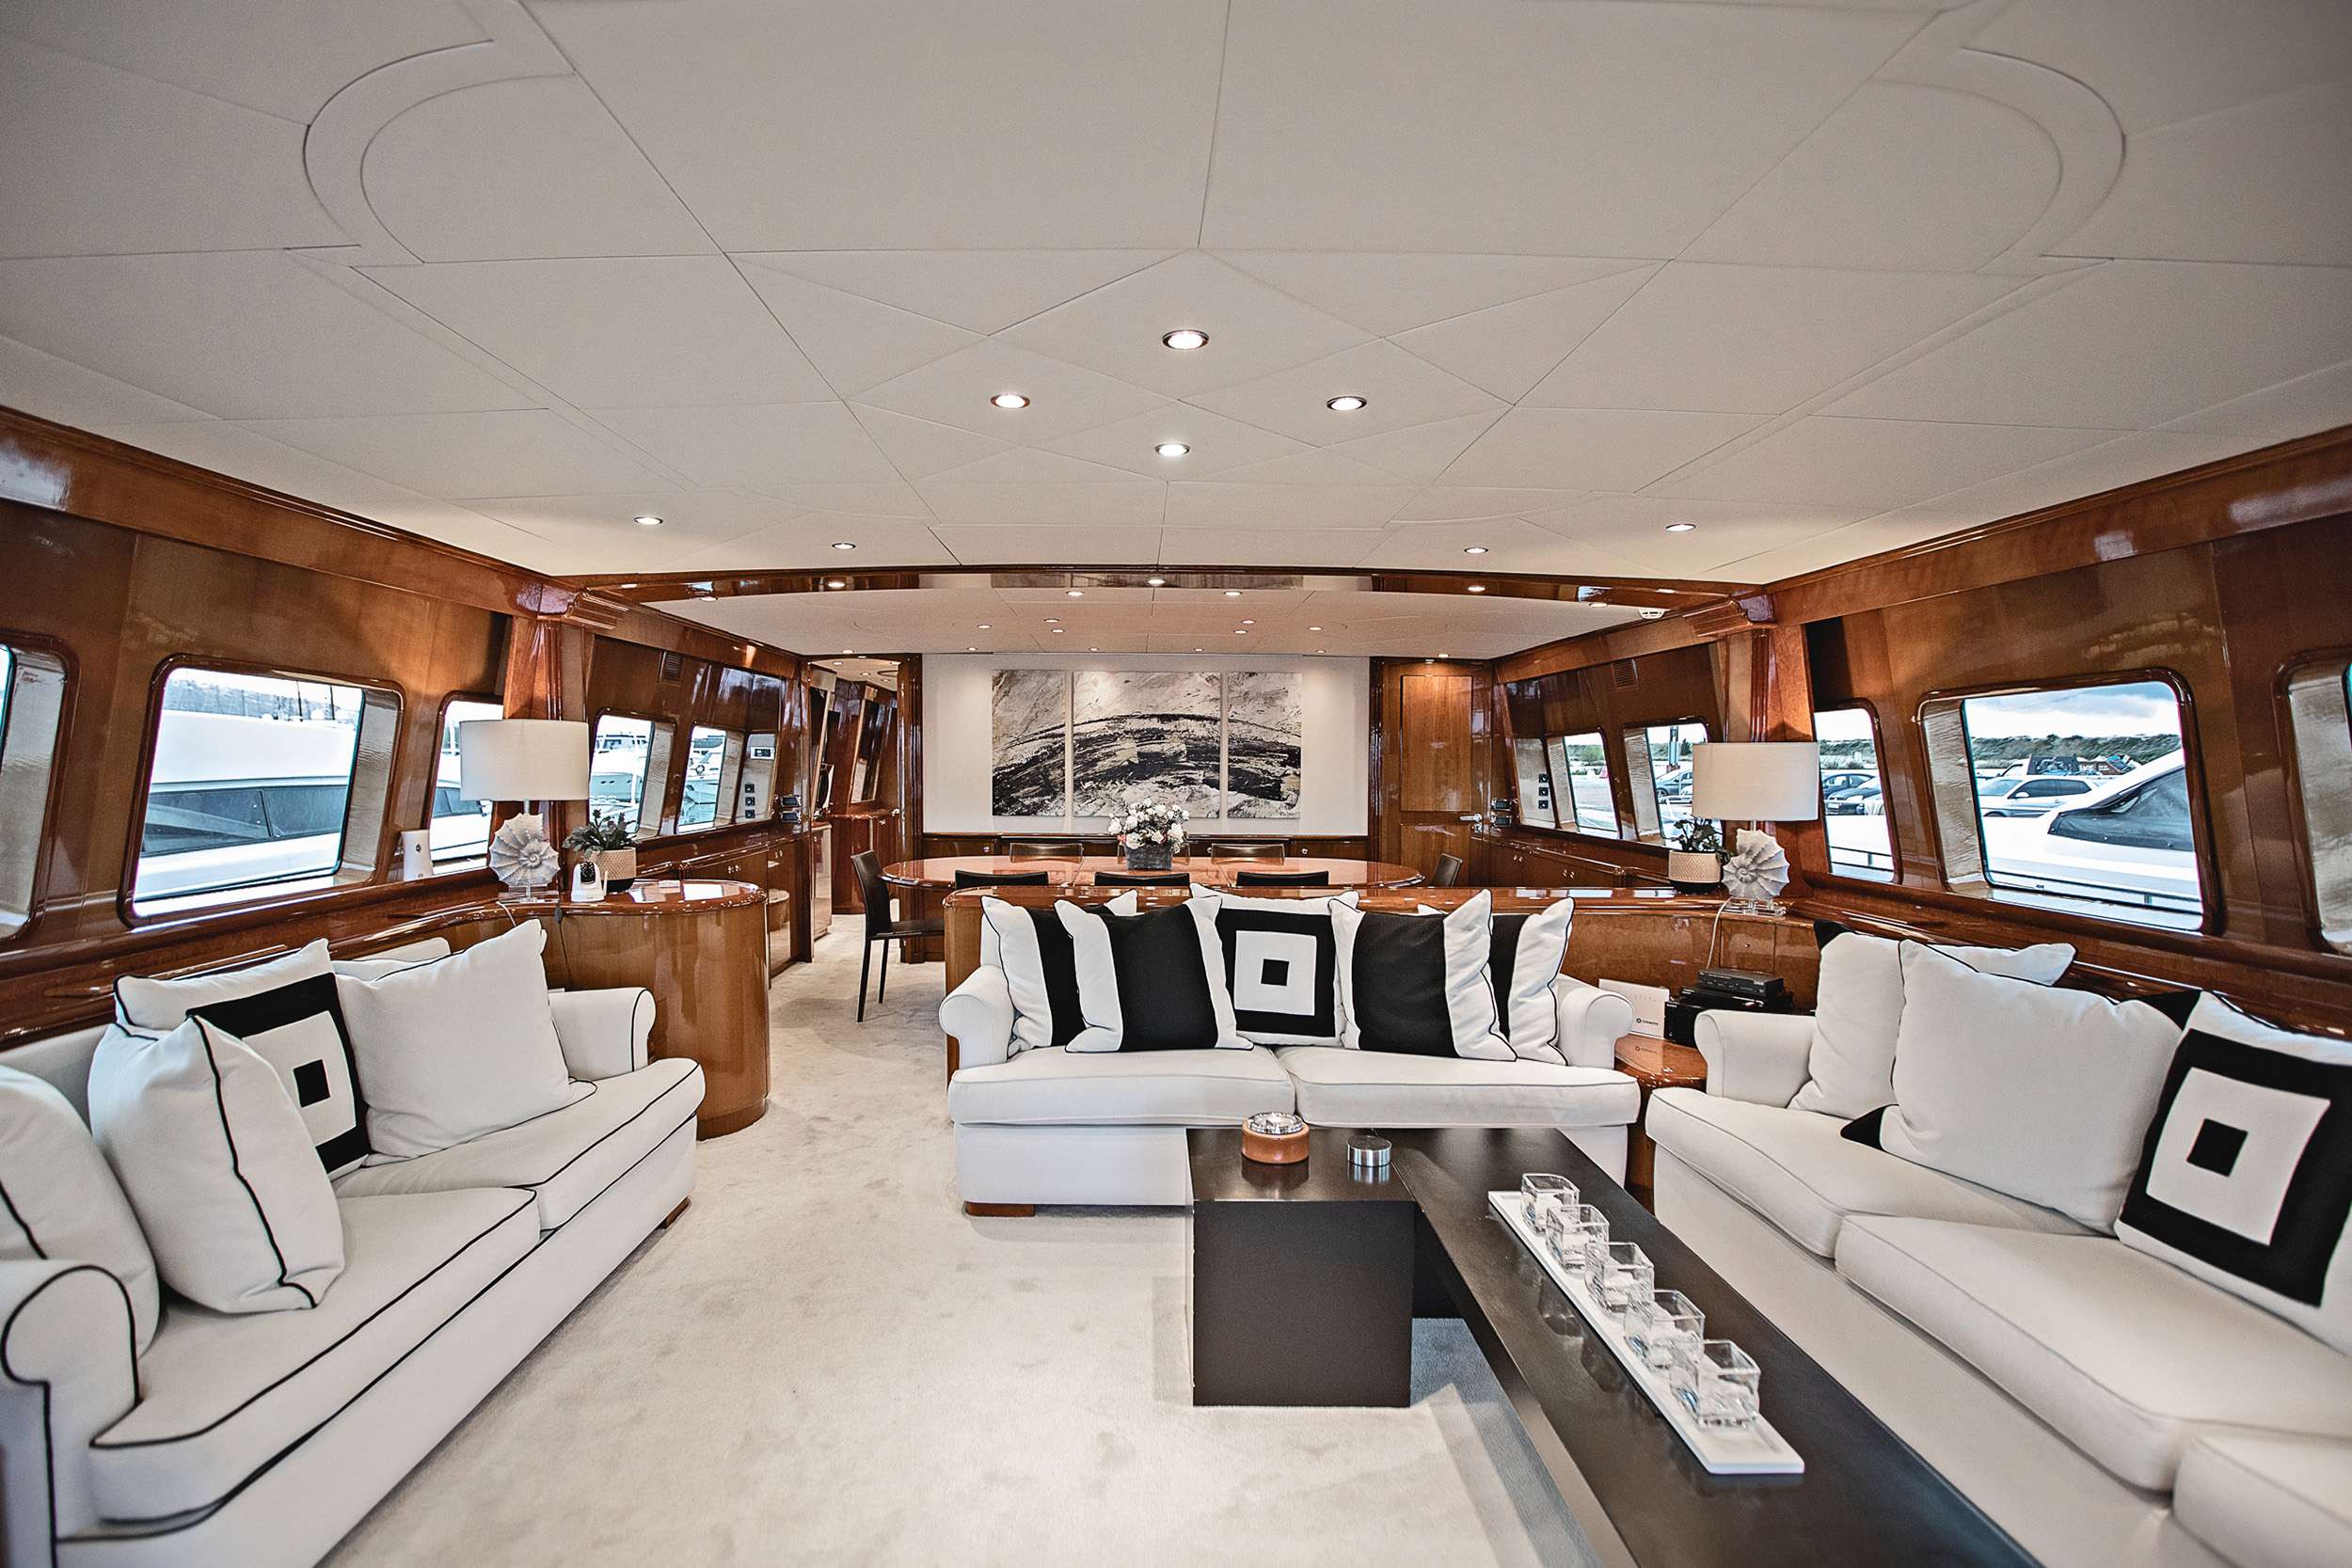 THEION Yacht Charter - Salon